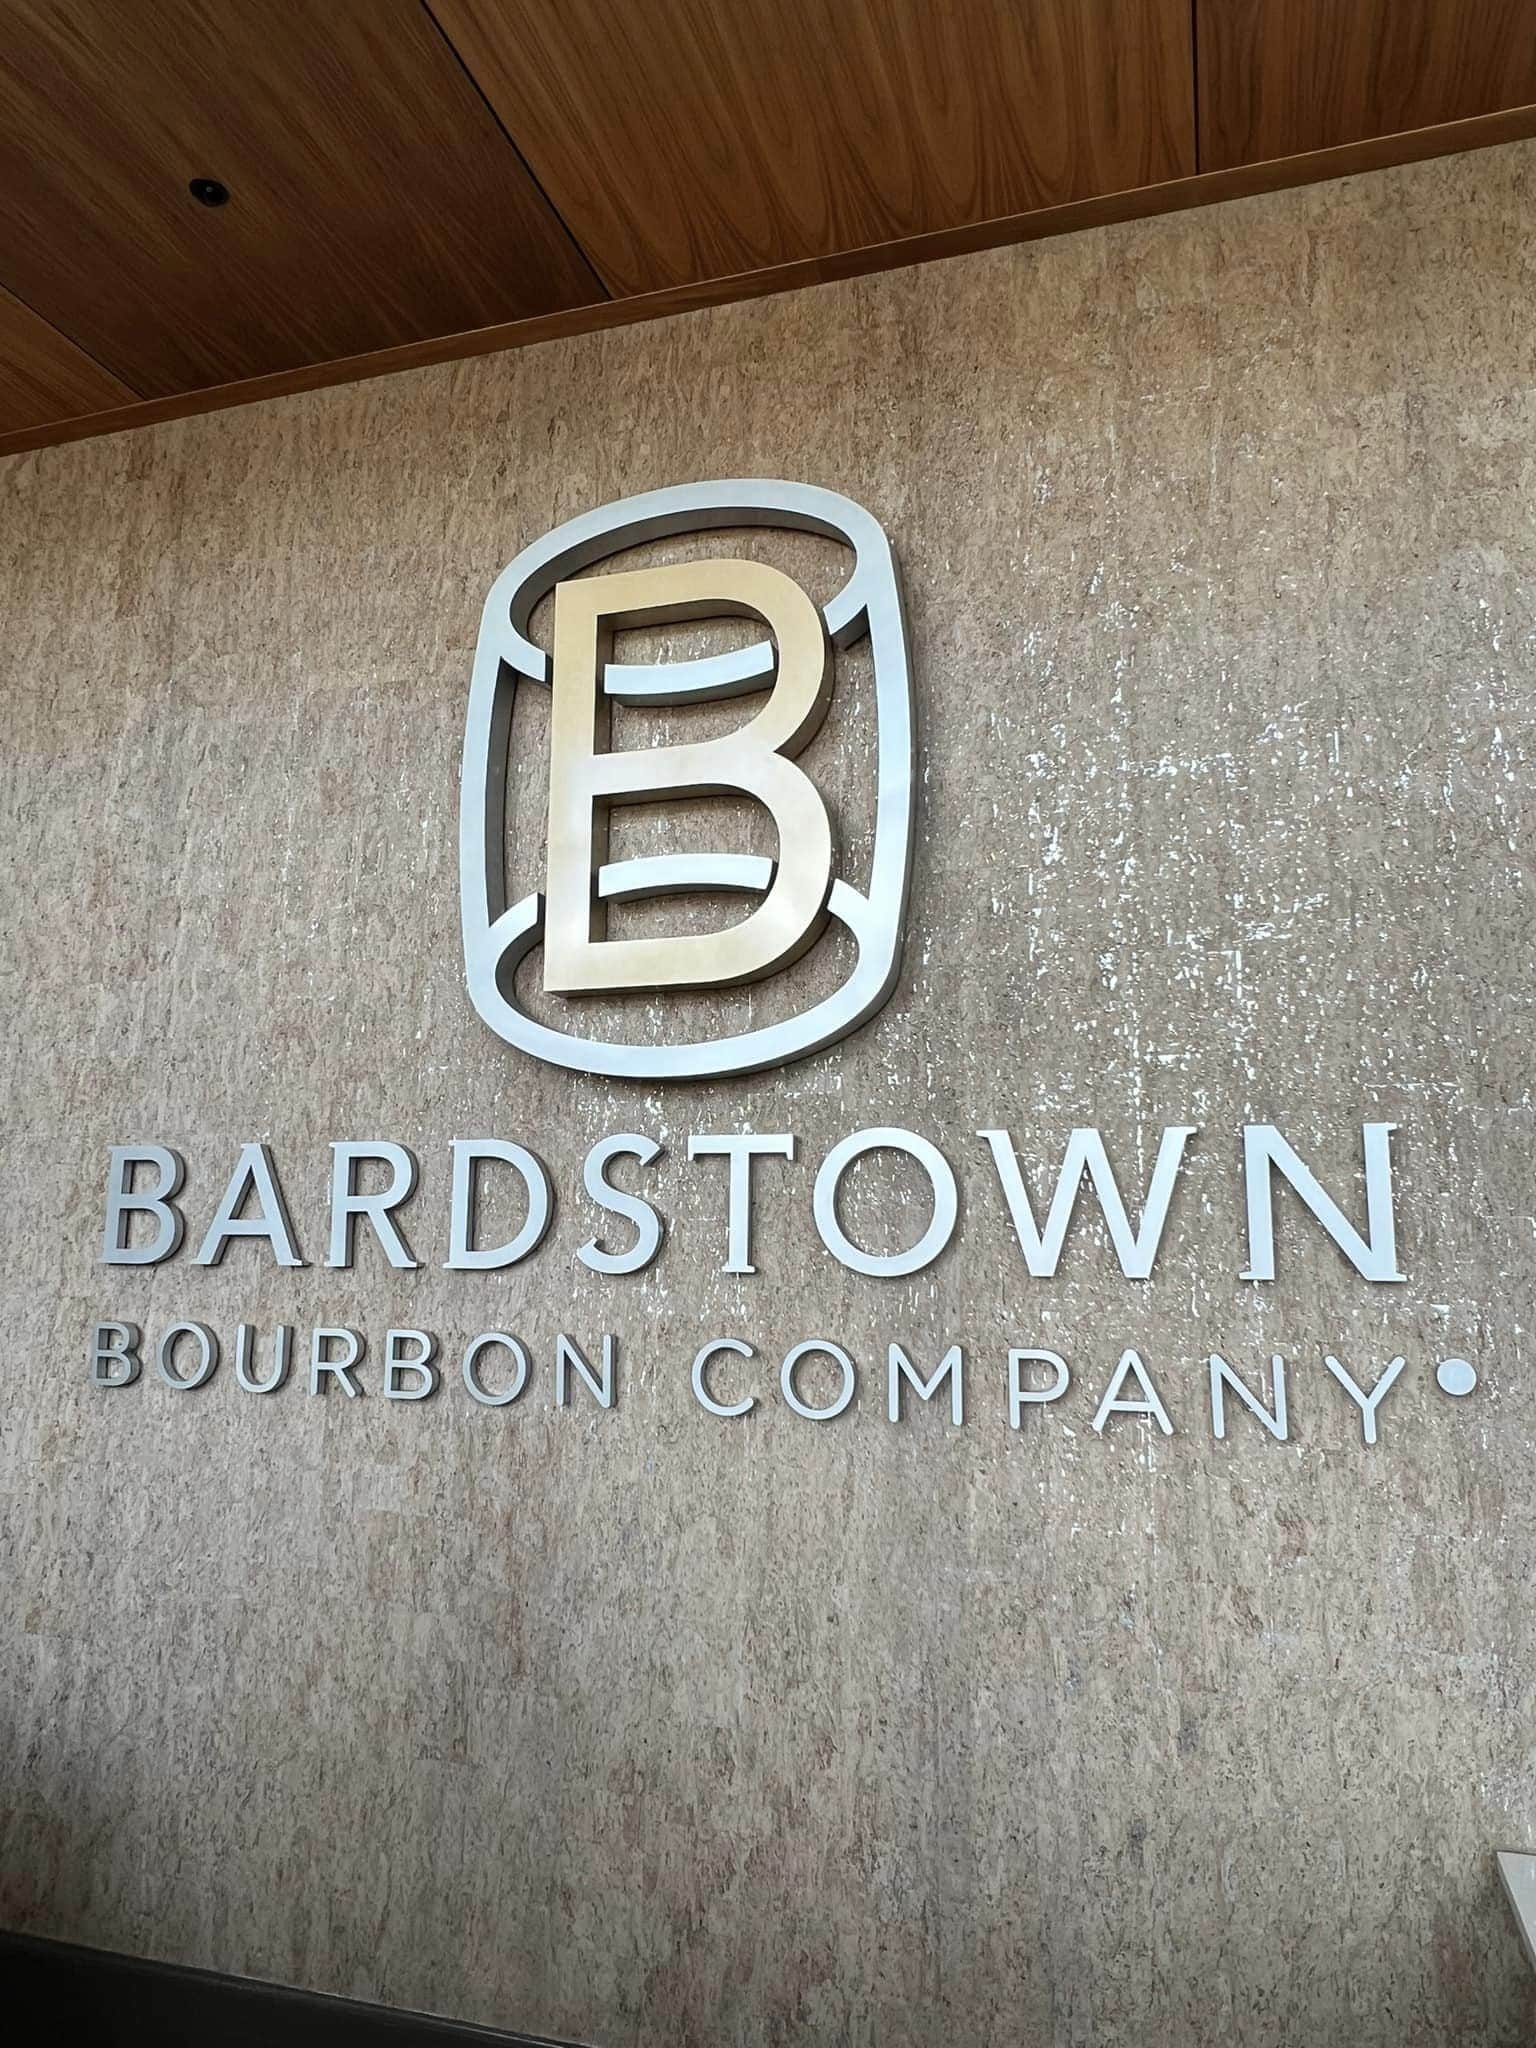 Bardstown Bourbon Company Distillery